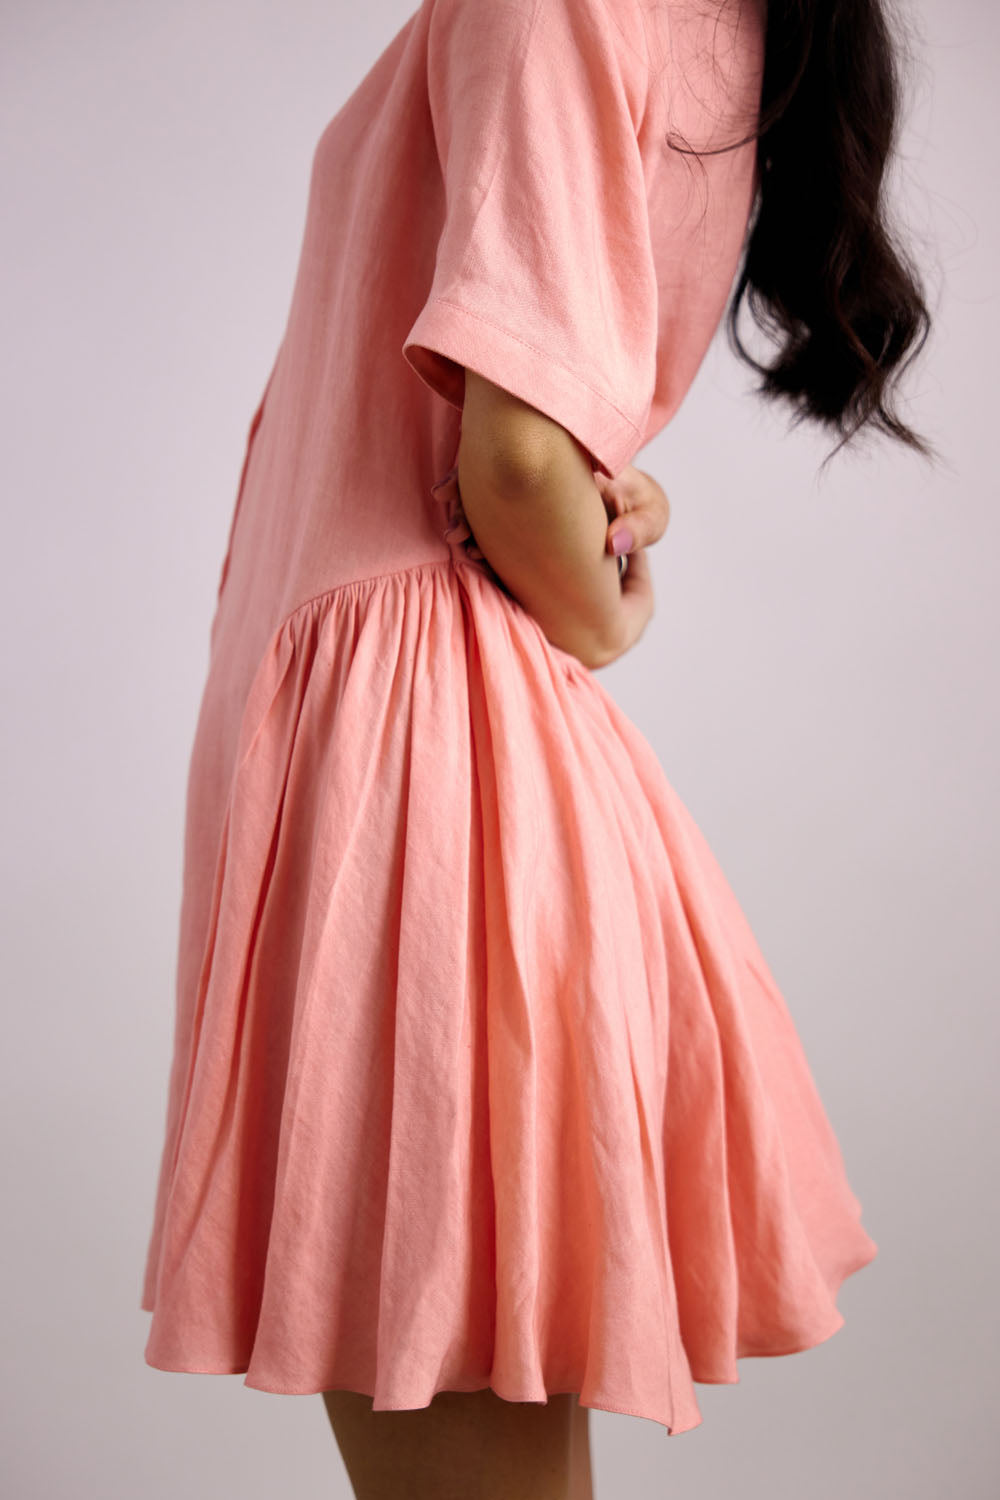 Pink Flared Dress